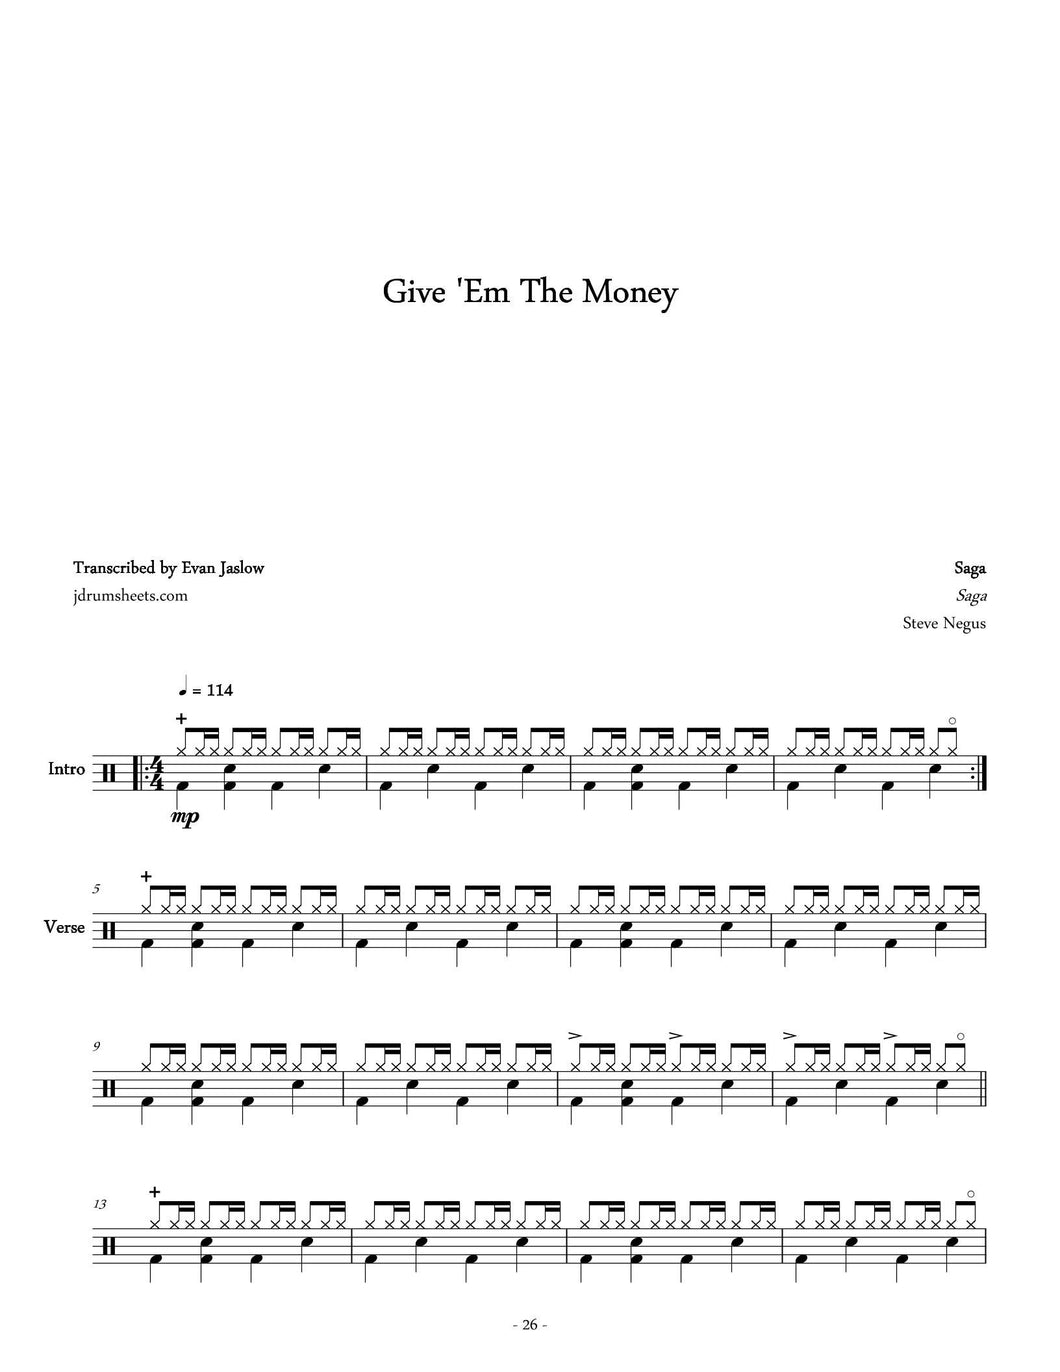 Give 'Em the Money - Saga - Full Drum Transcription / Drum Sheet Music - Jaslow Drum Sheets